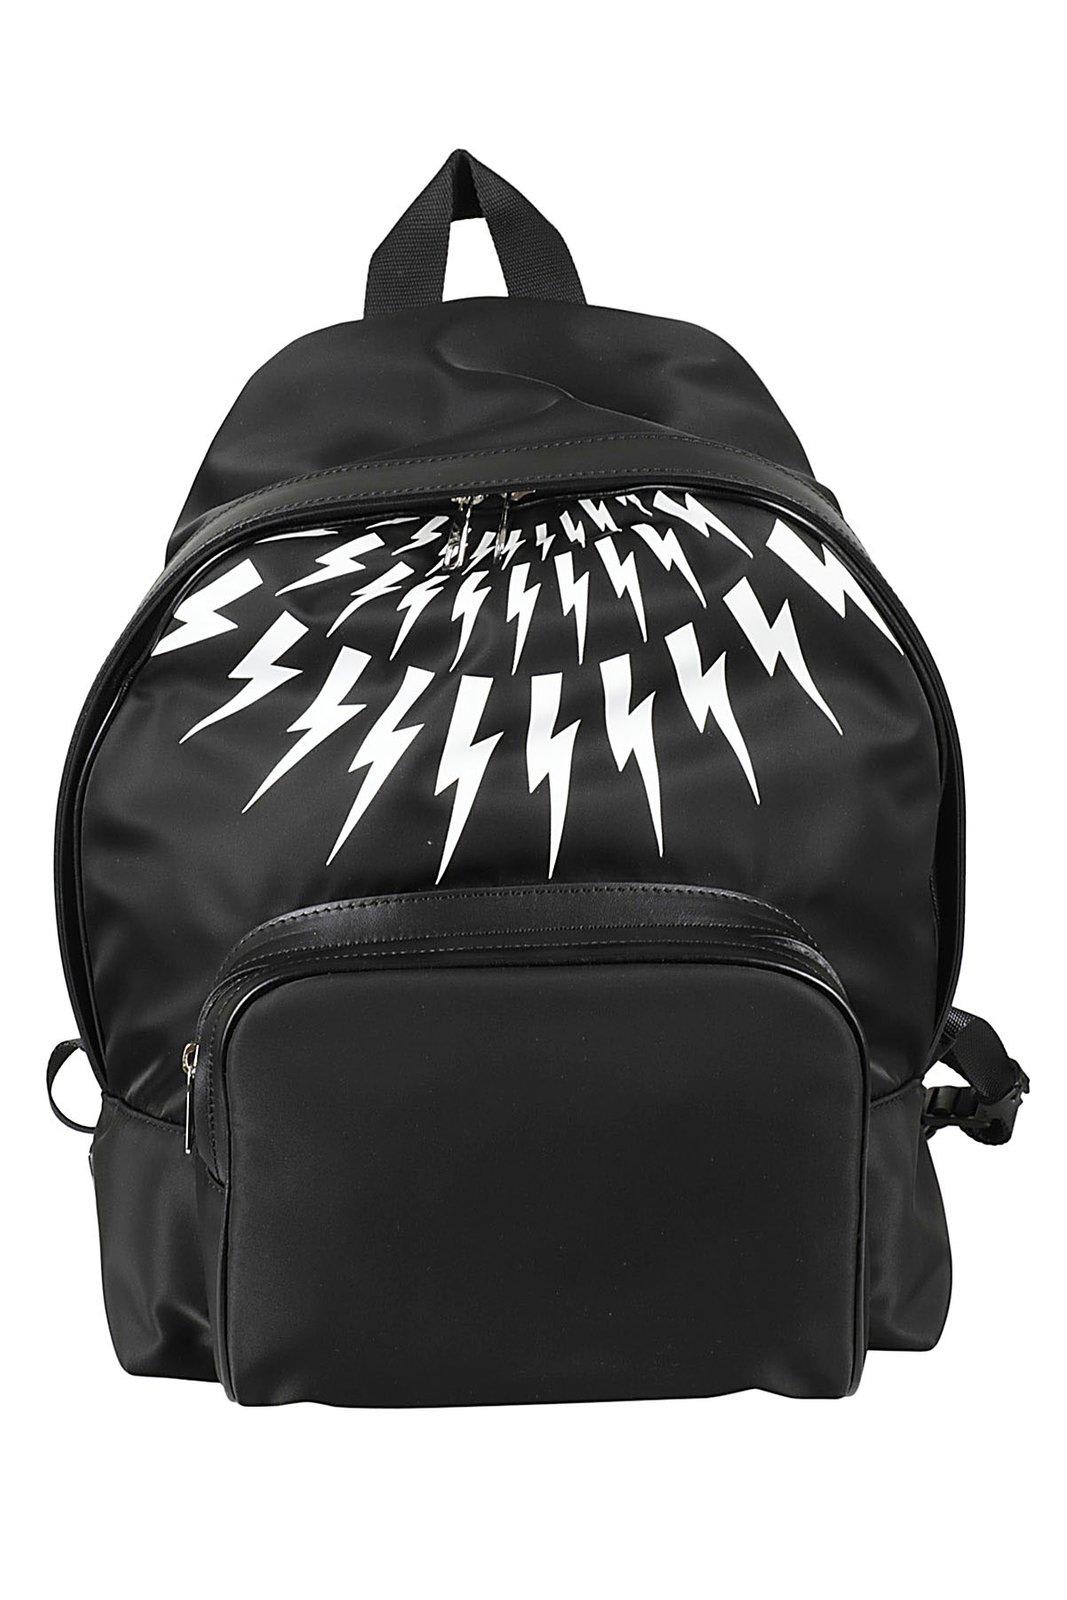 Thunder Printed Zipped Backpack